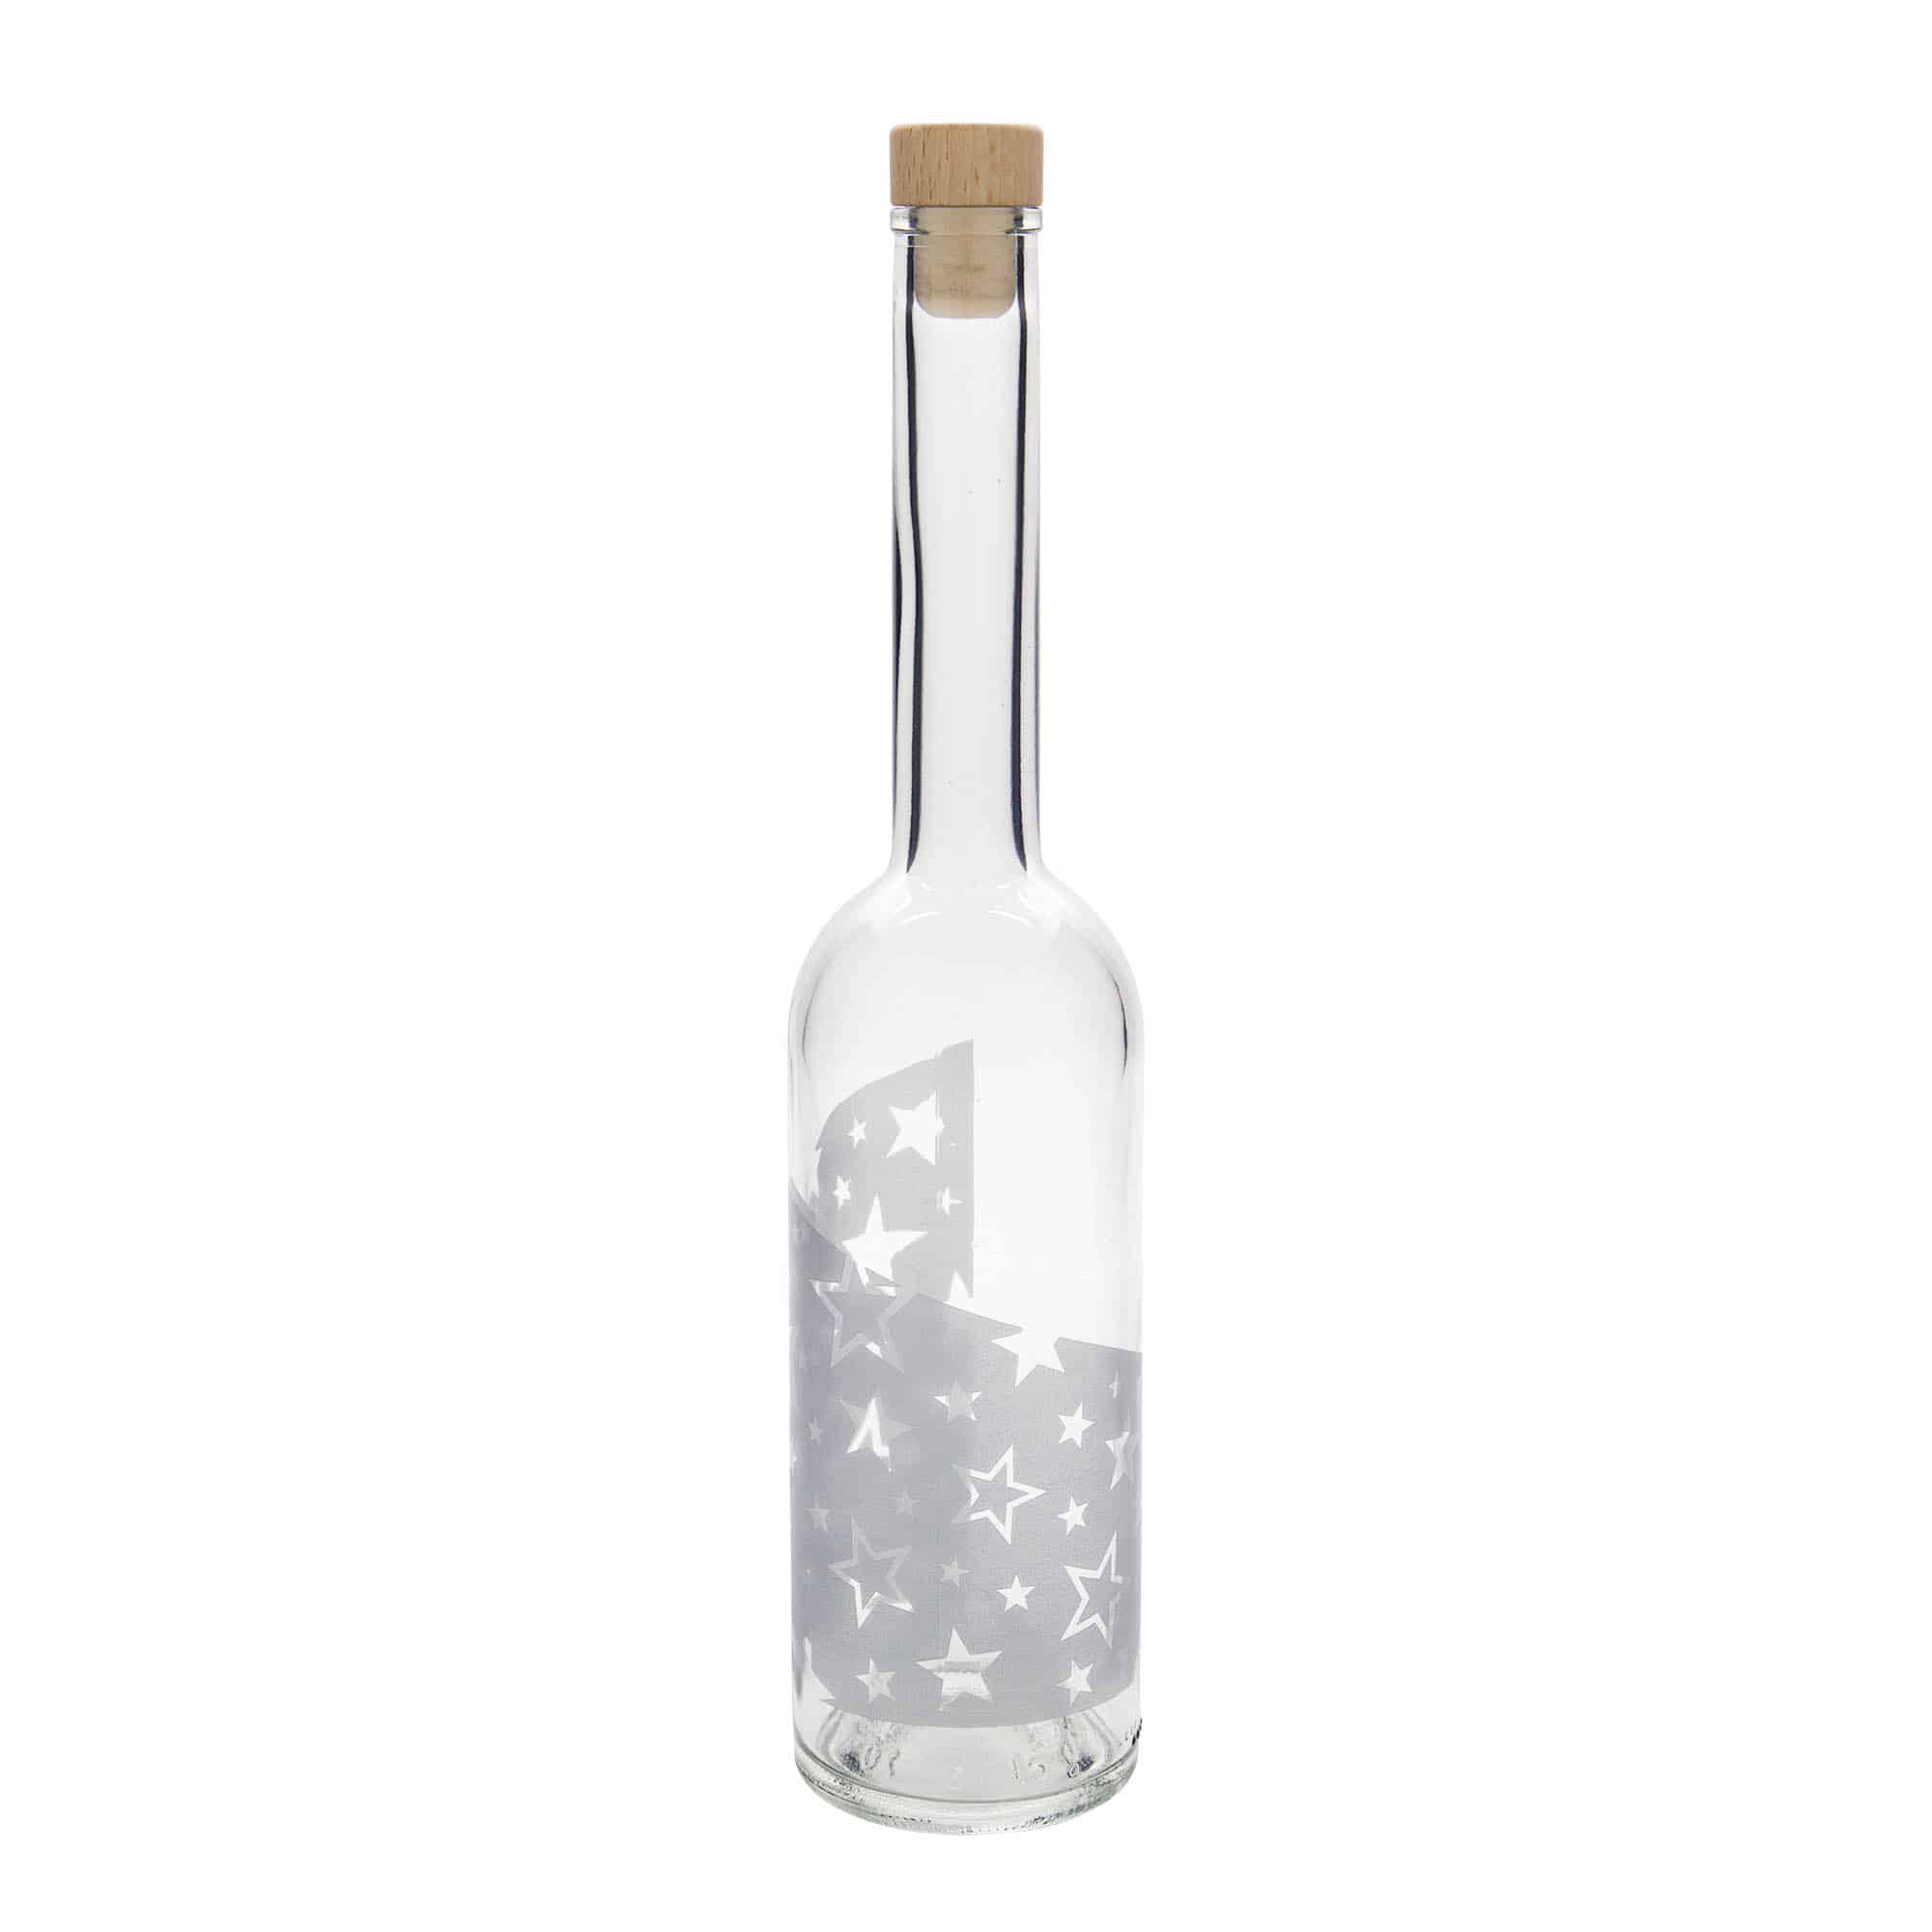 500 ml glass bottle 'Opera', print: silver stars, closure: cork